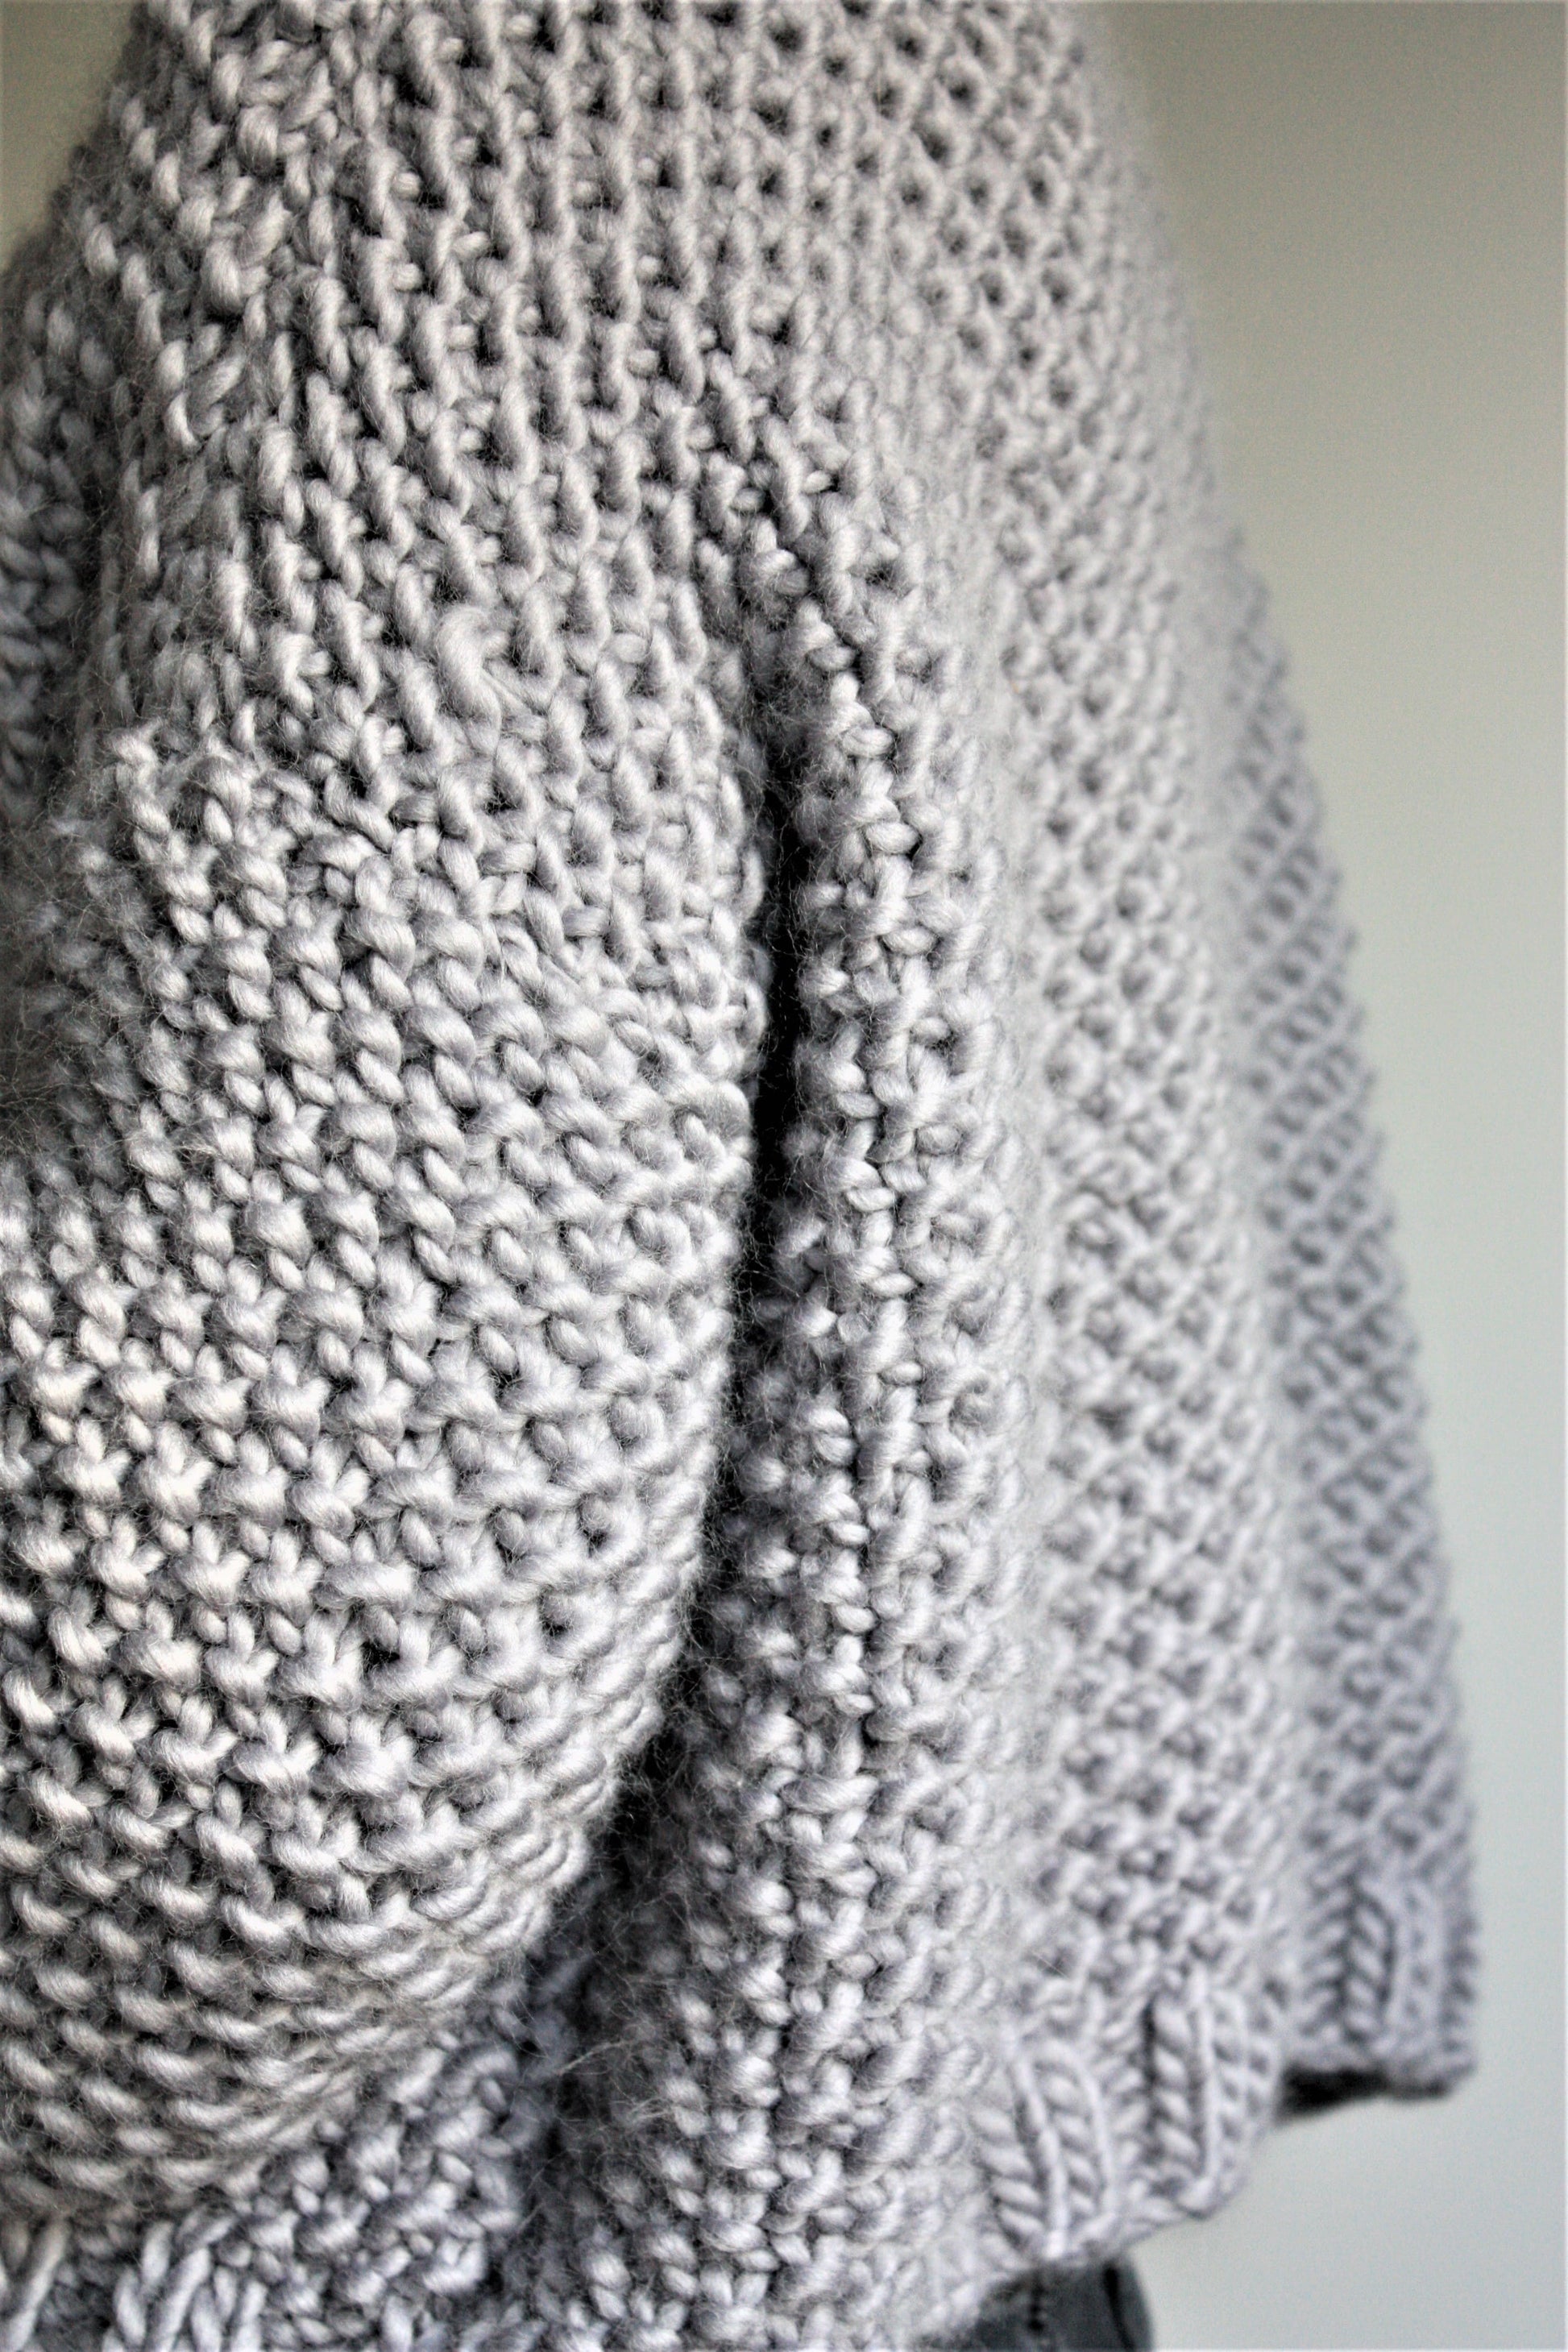 Easy Knitting Pattern - Chunky Knit Moss Stitch Cropped Cardigan